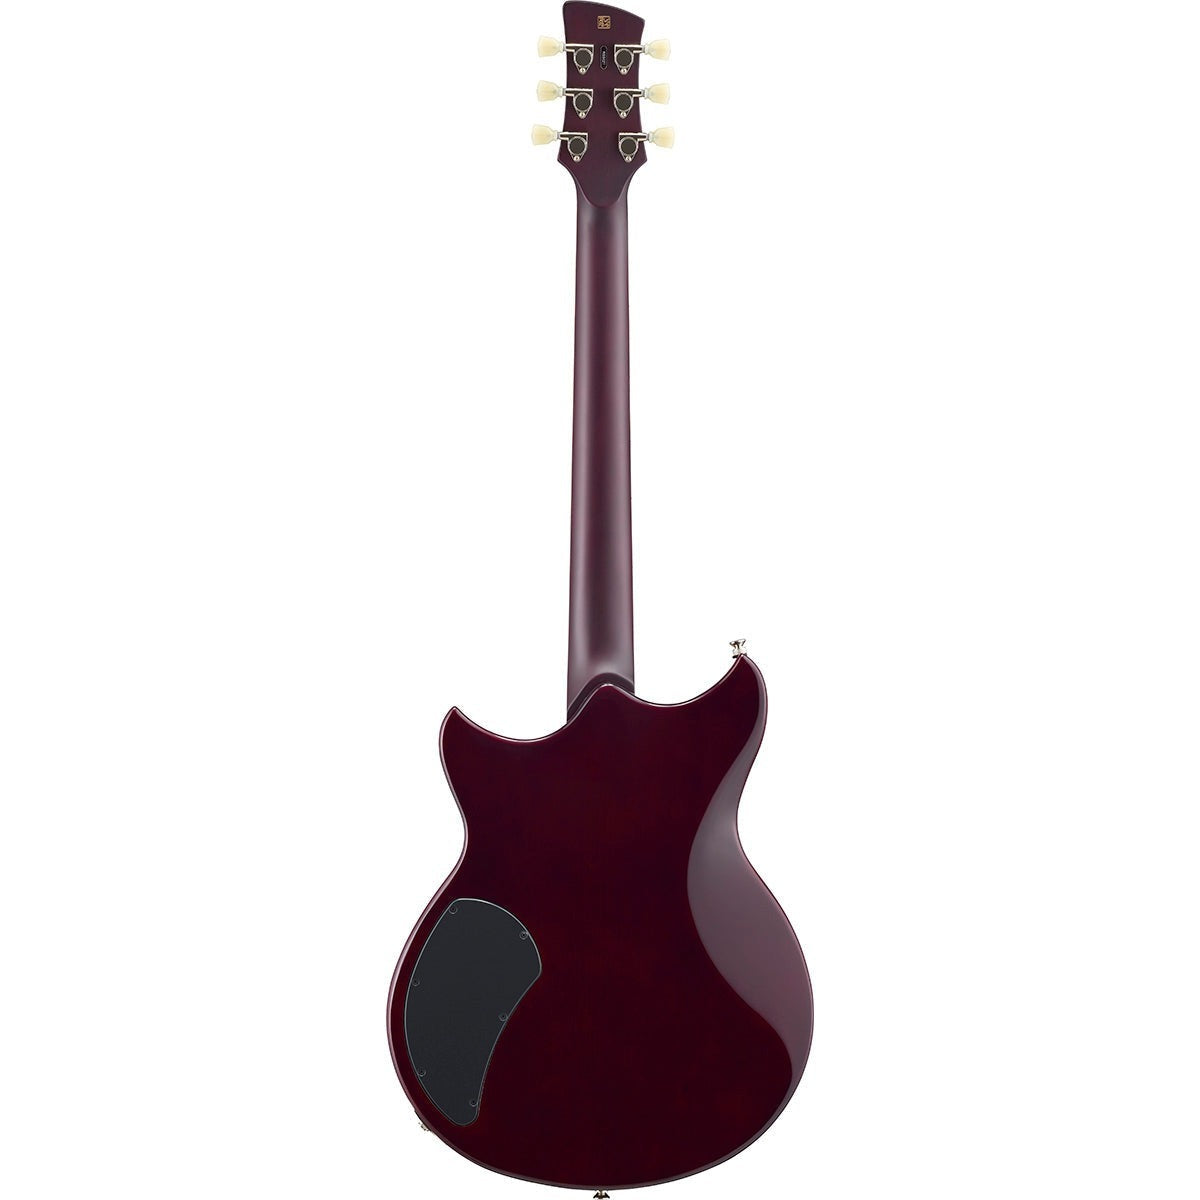 Yamaha RSS02T SSB Revstar Standard electric guitar